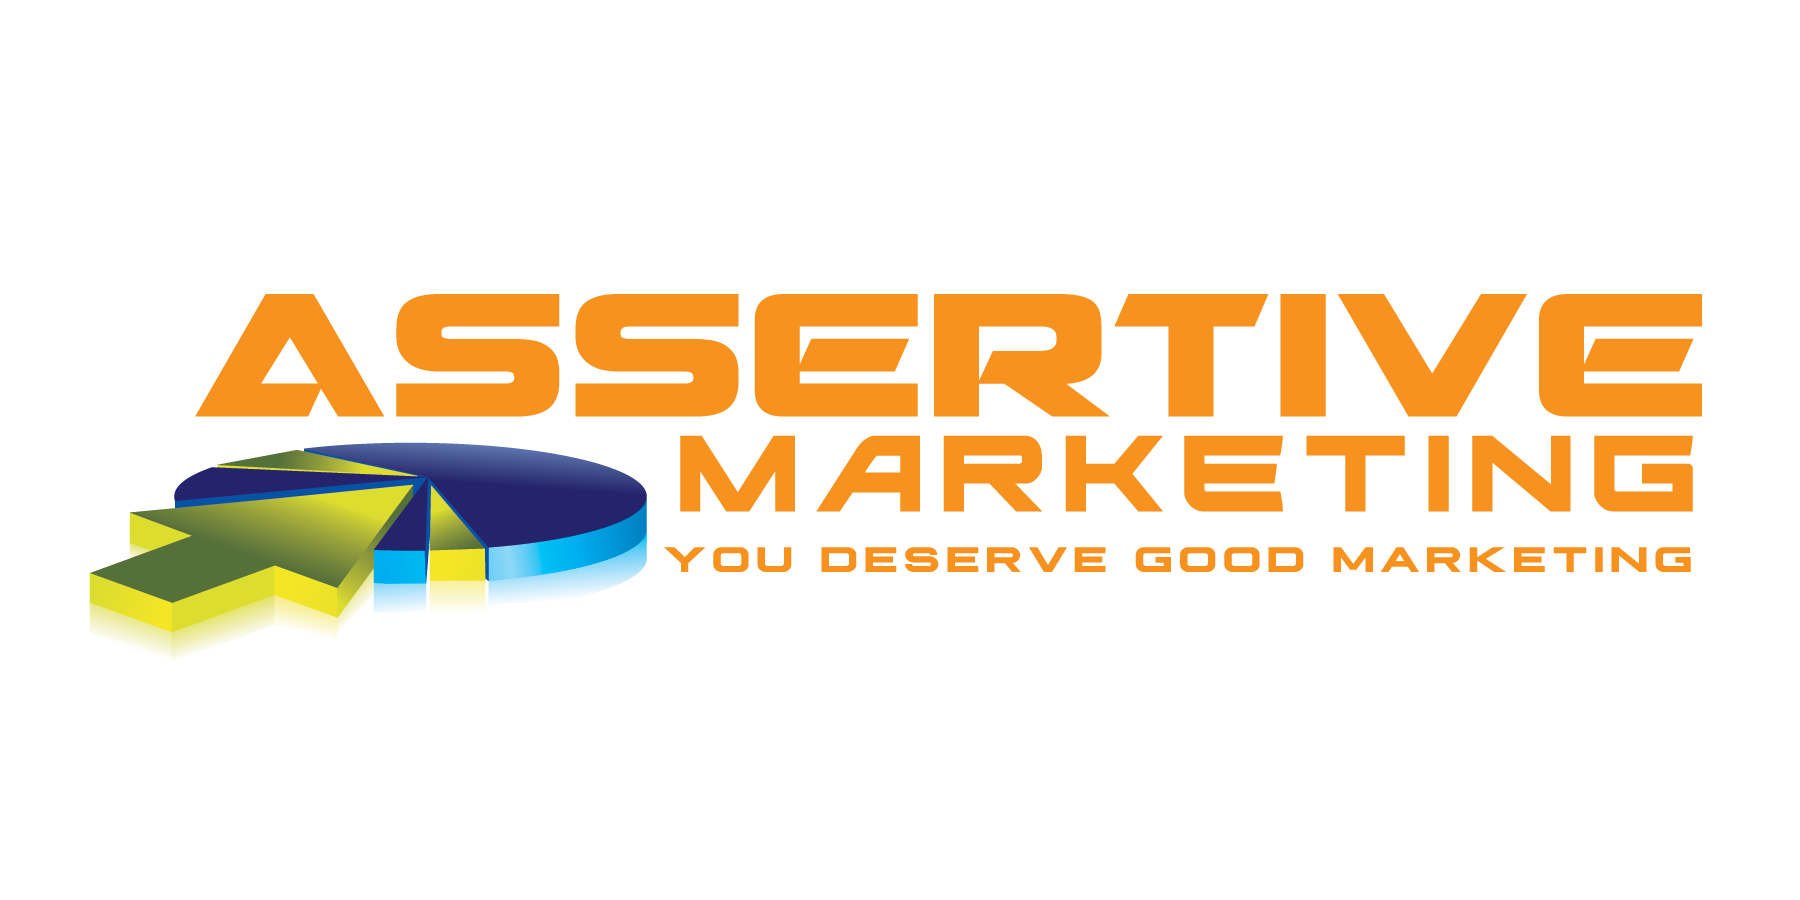 Assertive Marketing